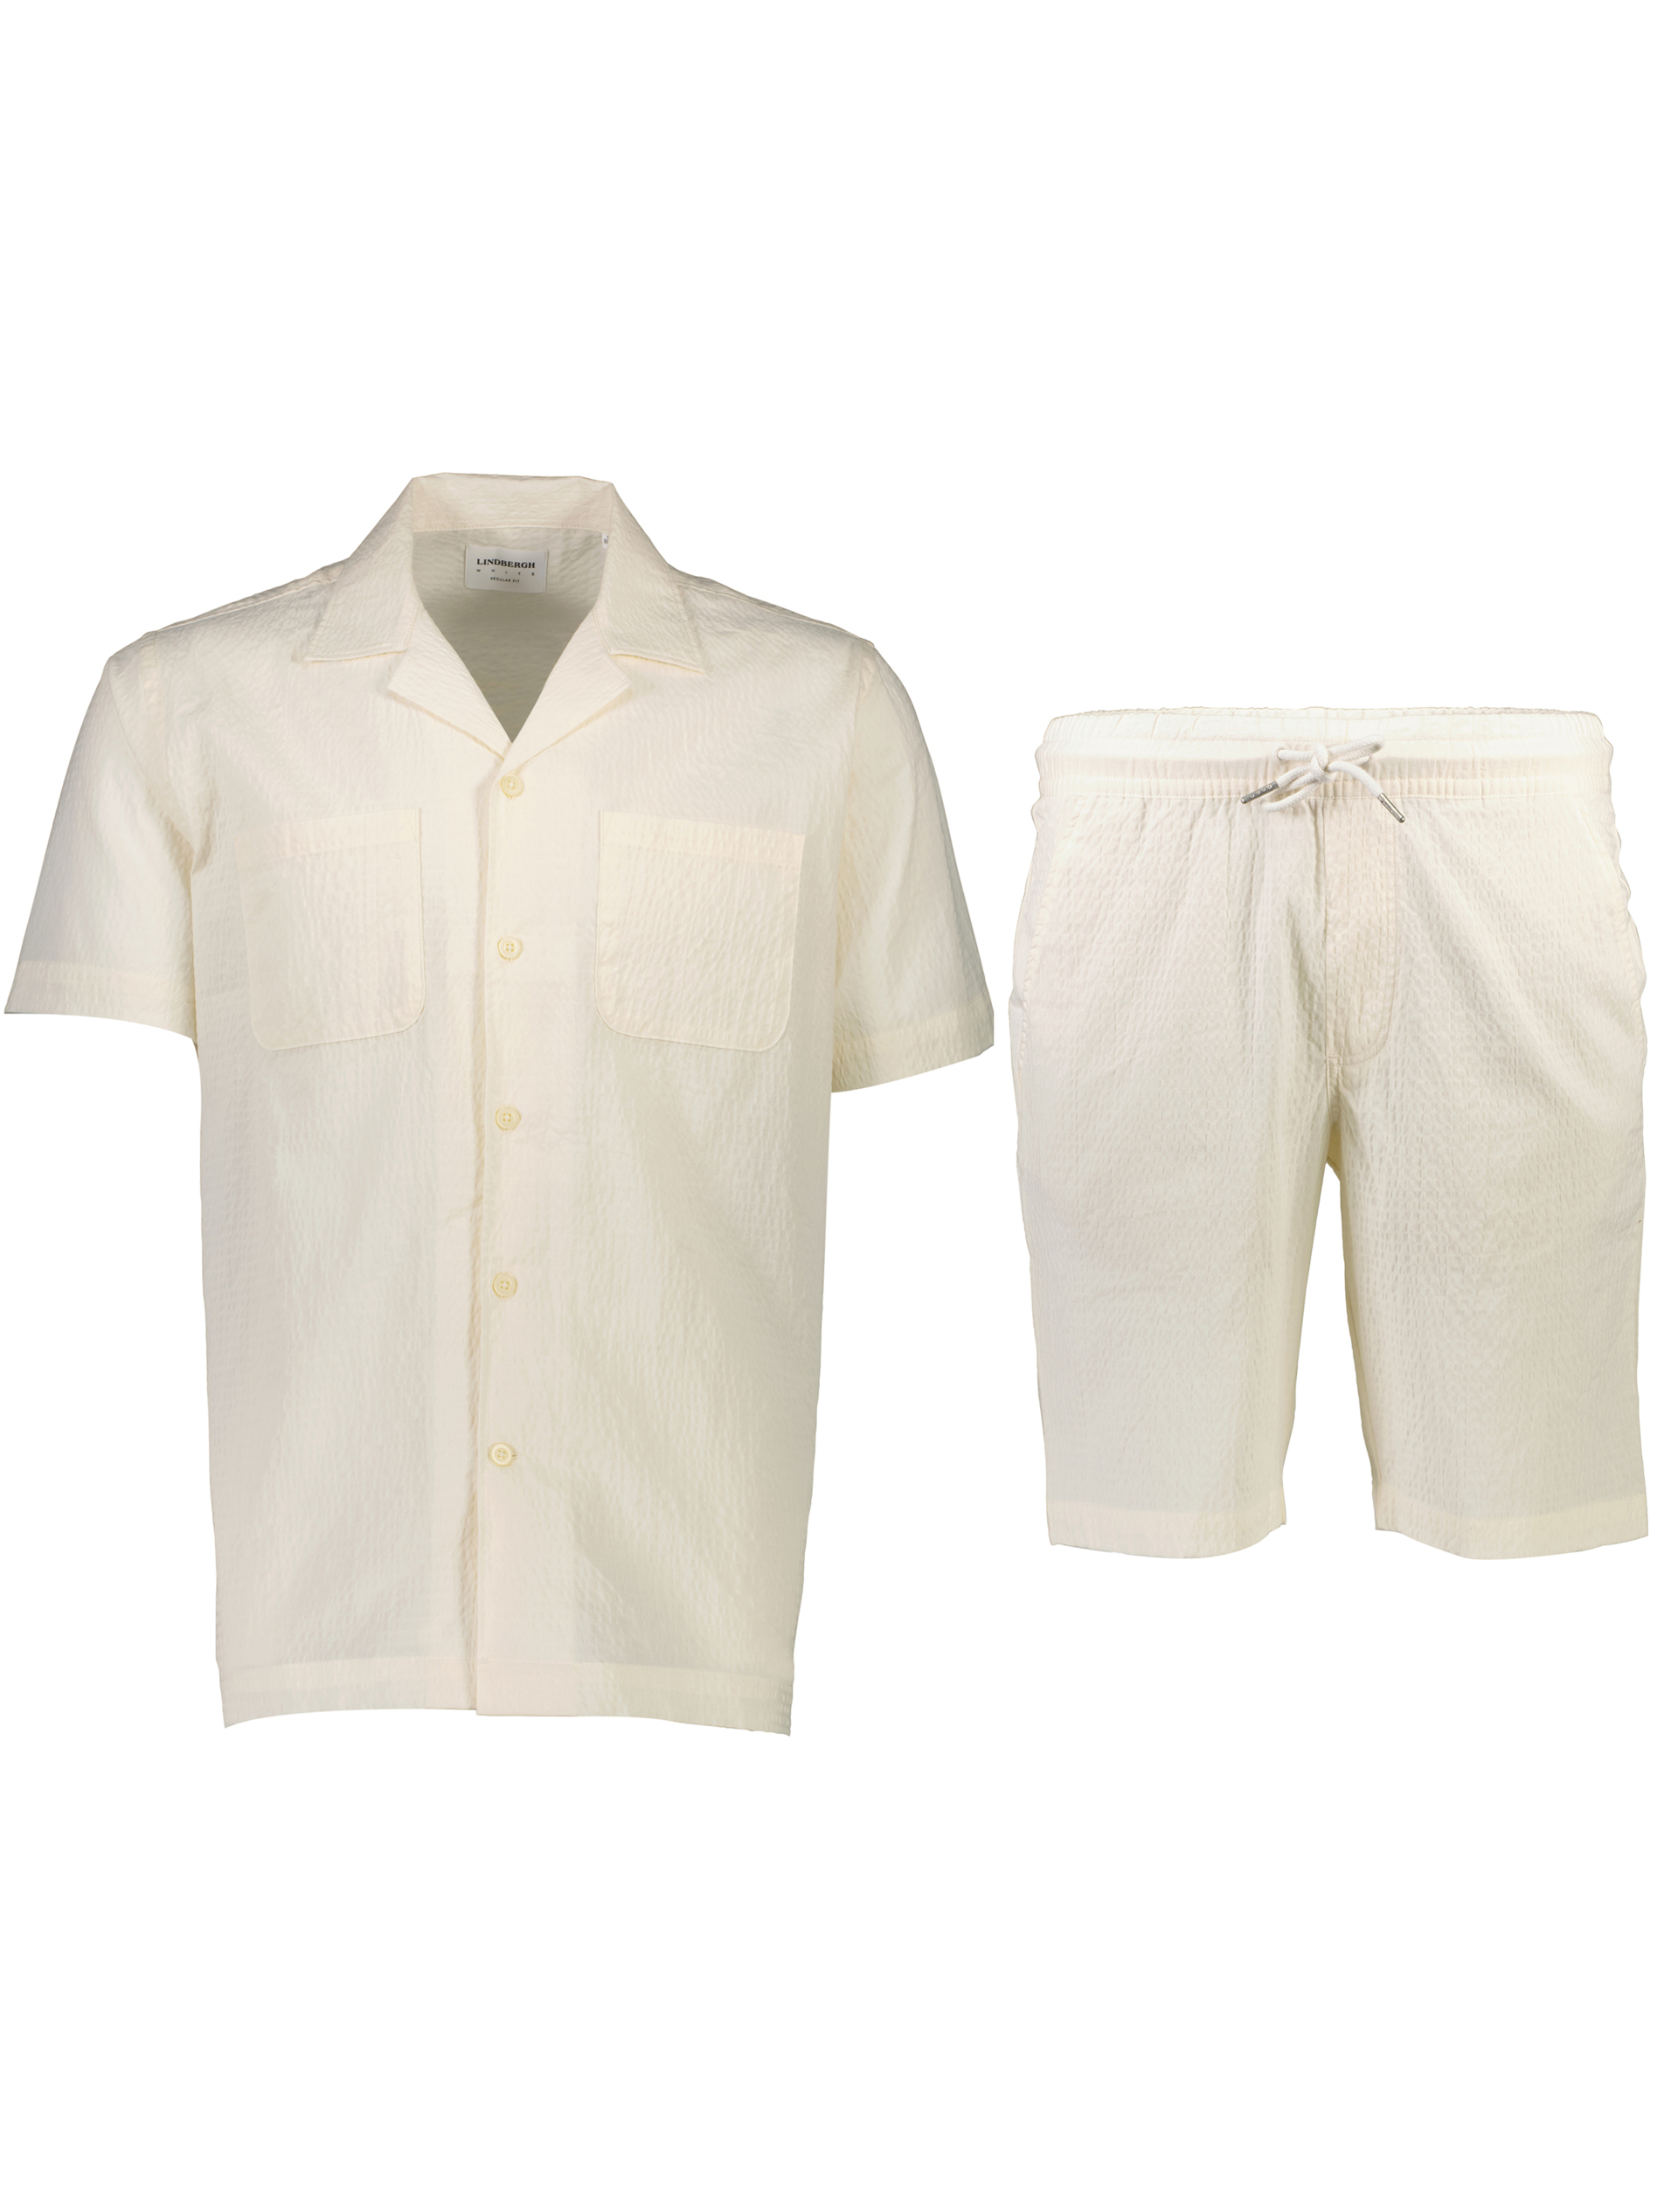 Lindbergh Casual shirt white / off white